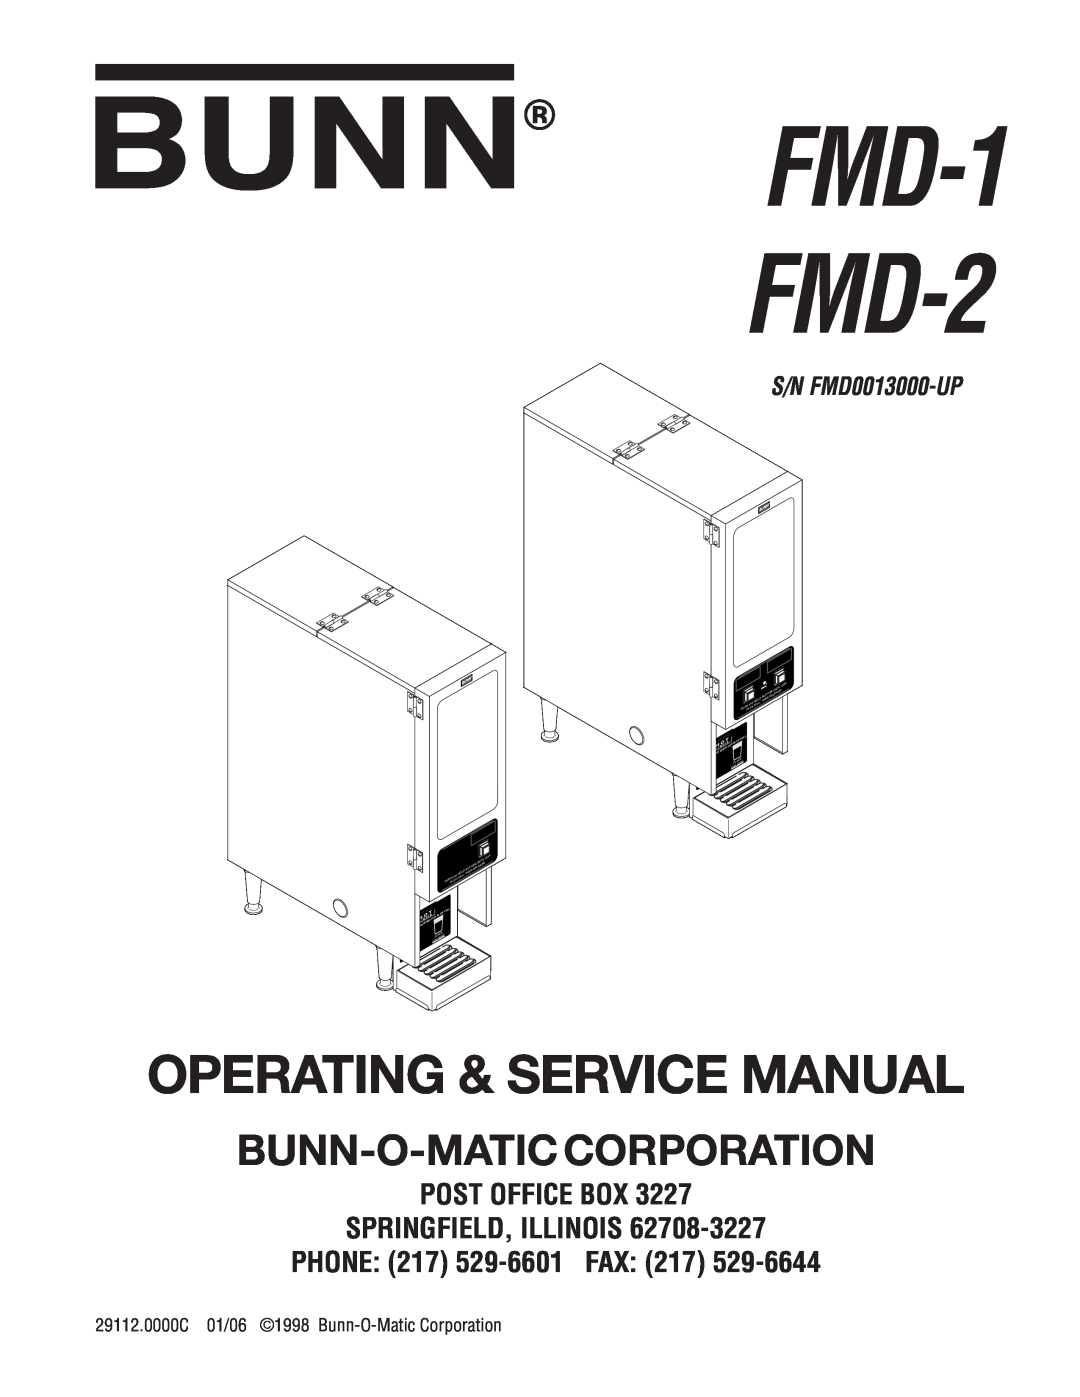 Bunn FMD-1 FMD-2 service manual Bunn-O-Maticcorporation, POST OFFICE BOX SPRINGFIELD, ILLINOIS PHONE 217 529-6601 FAX 